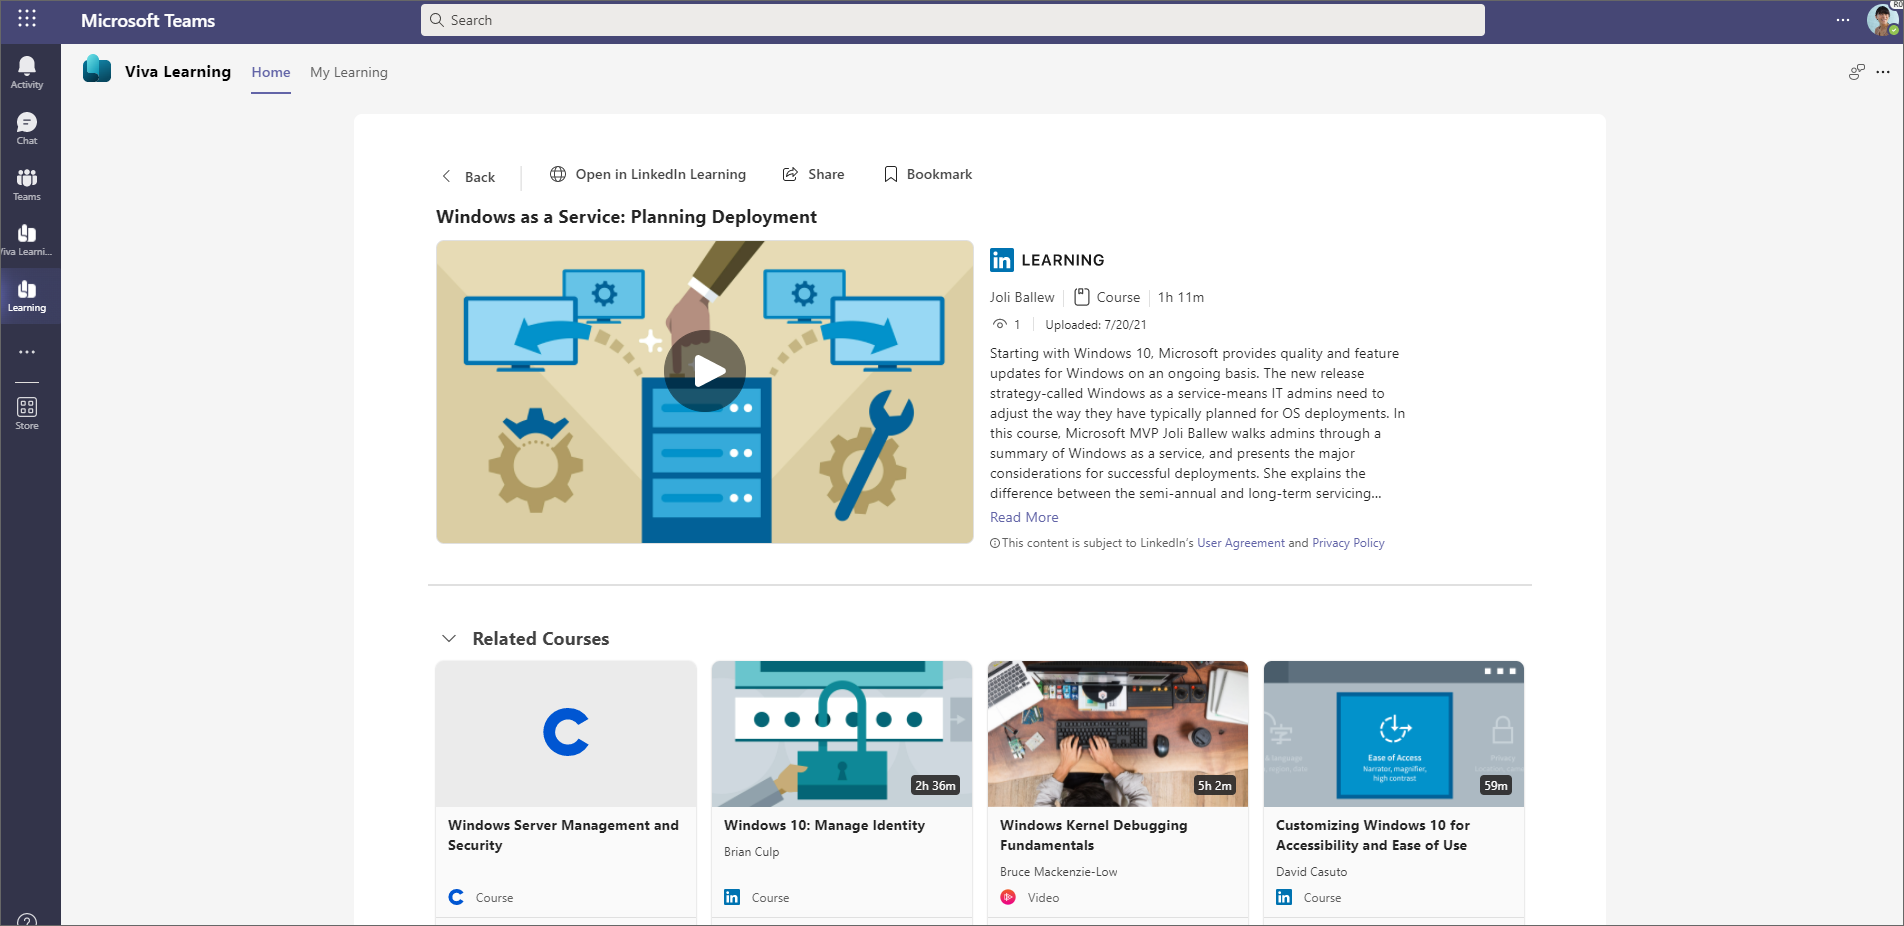 Screenshot of the Viva Learning homepage in Teams.